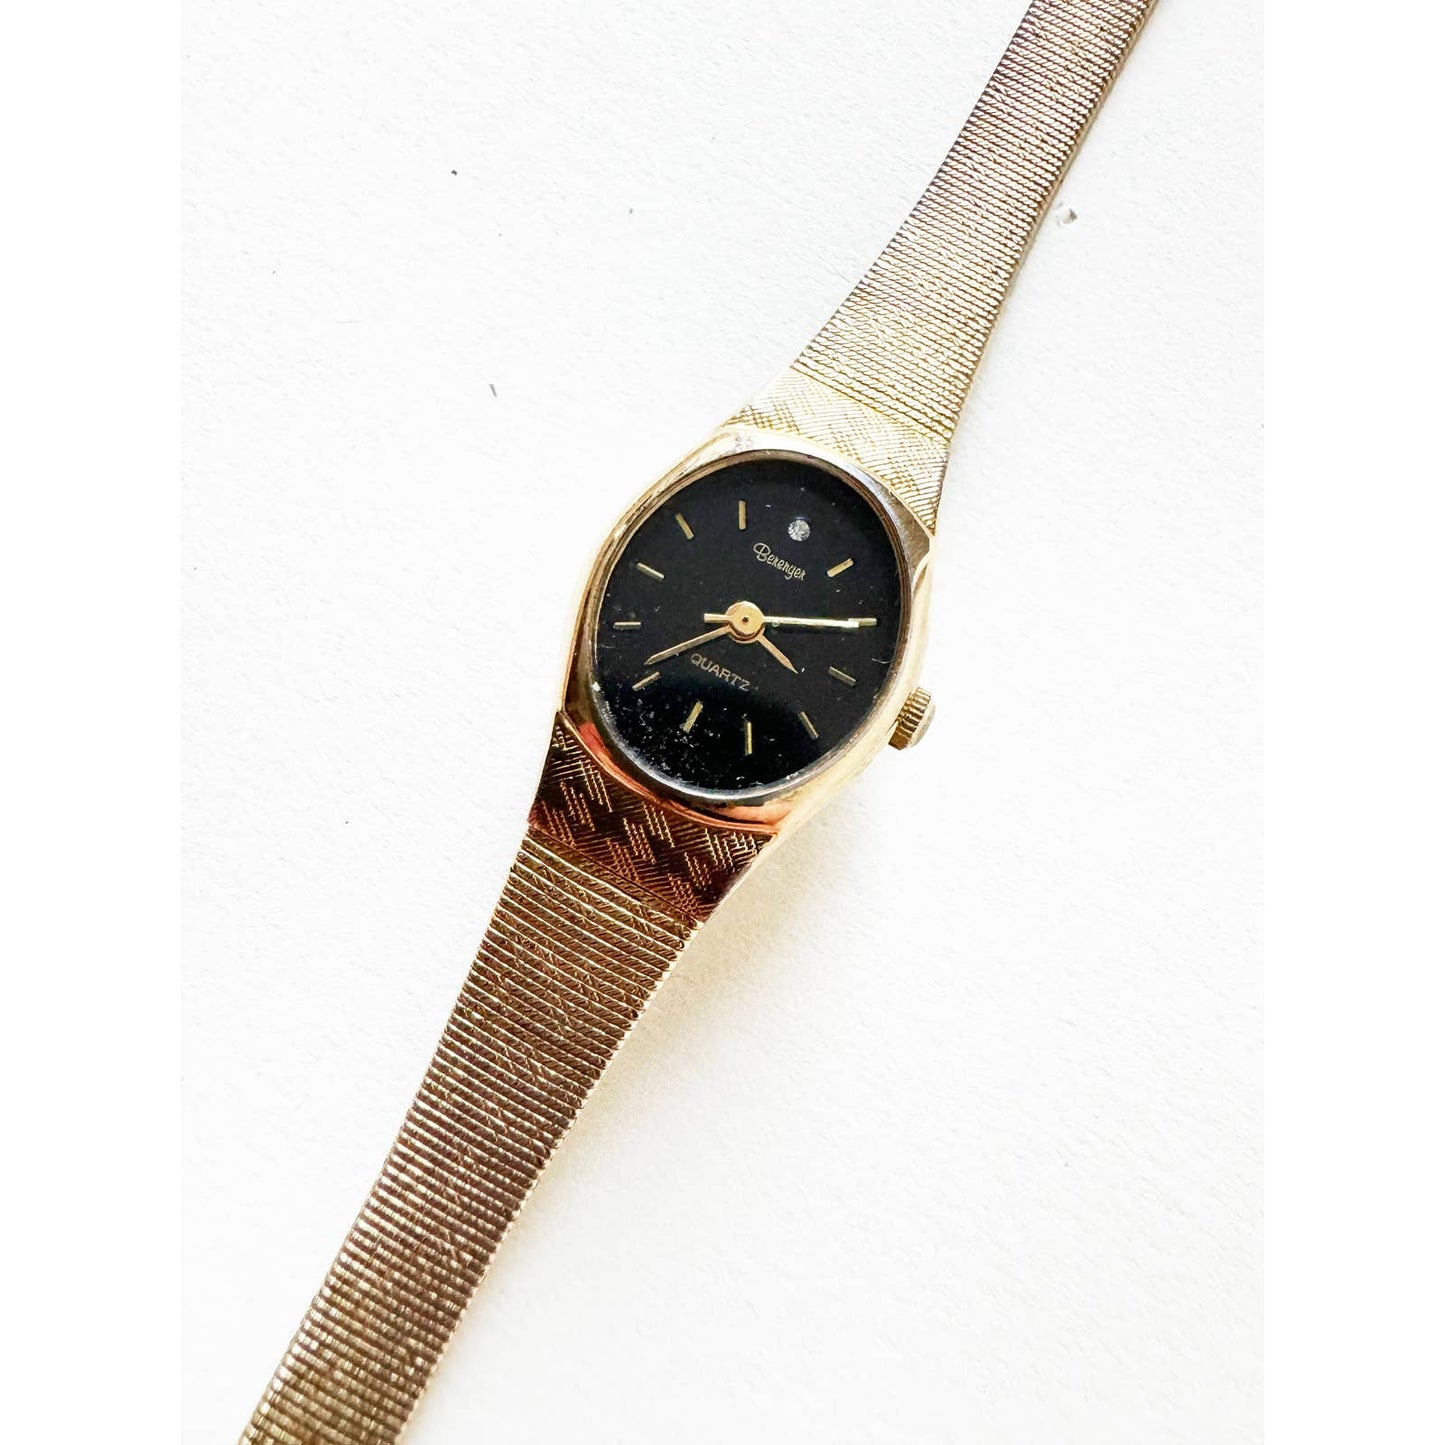 Vintage Matte Gold Watch w/ Oval Black Face